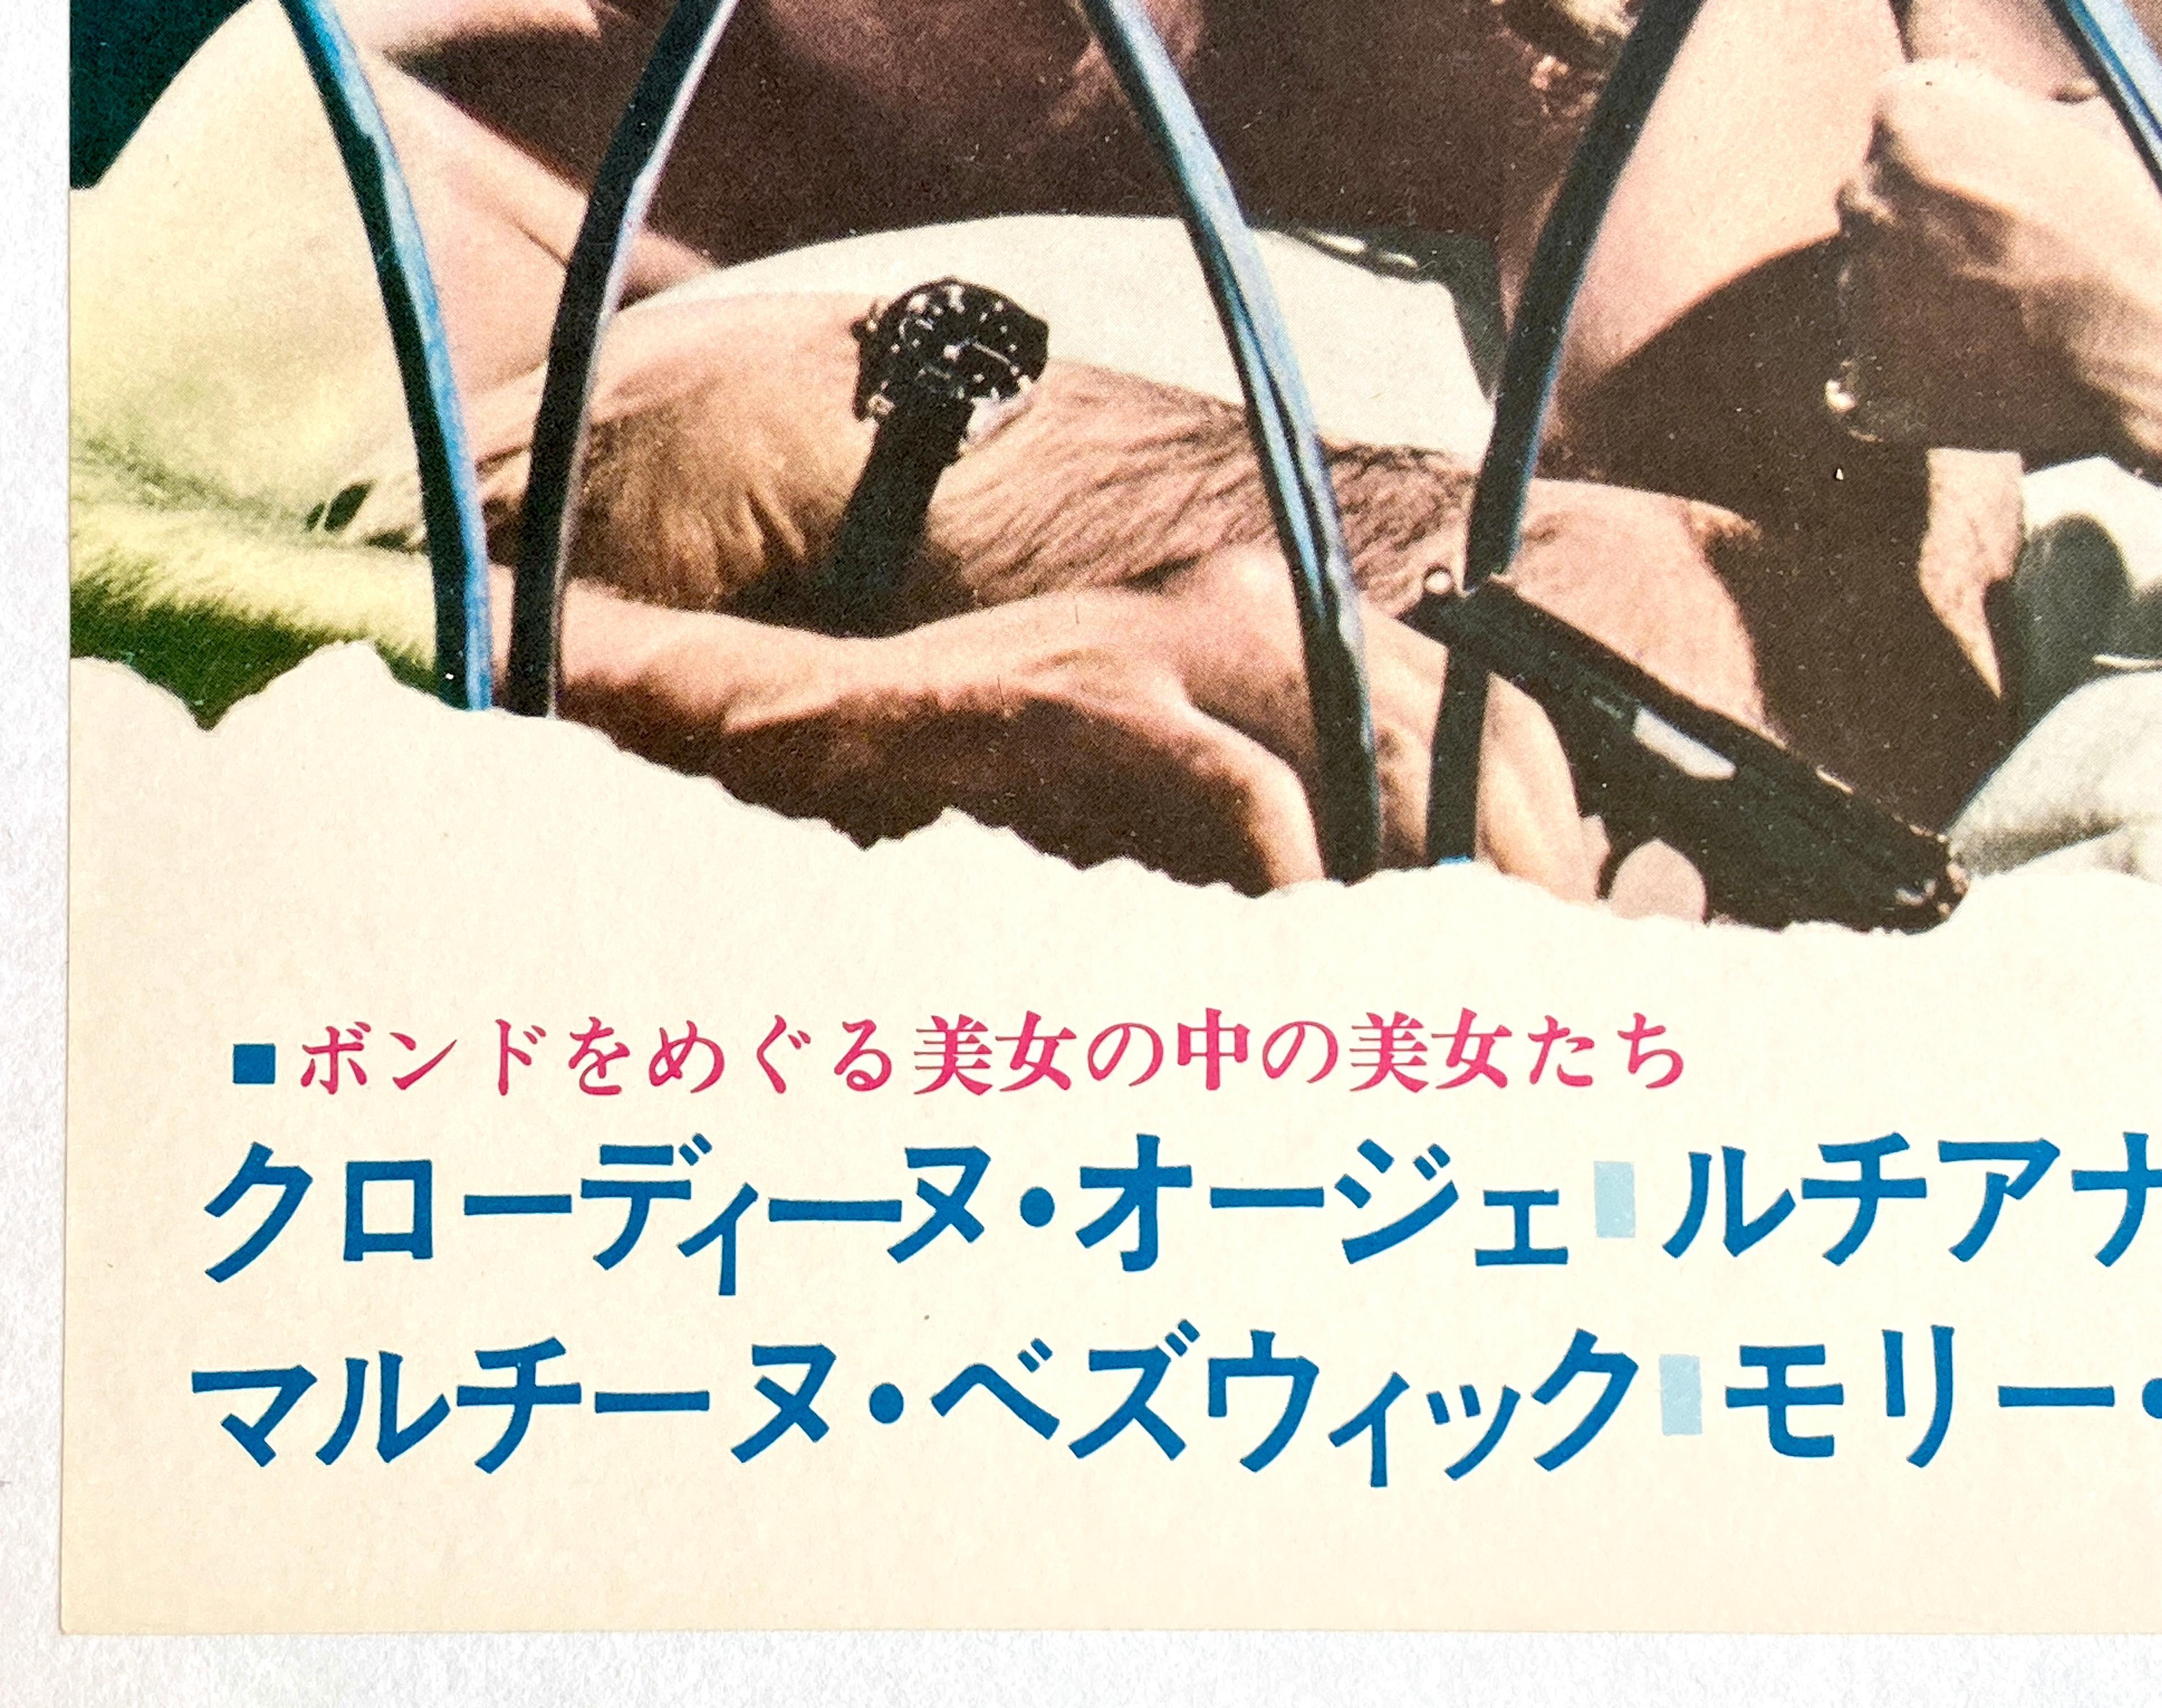 James Bond 'Thunderball' Original Vintage Movie Poster, Japanese, 1965 For Sale 7